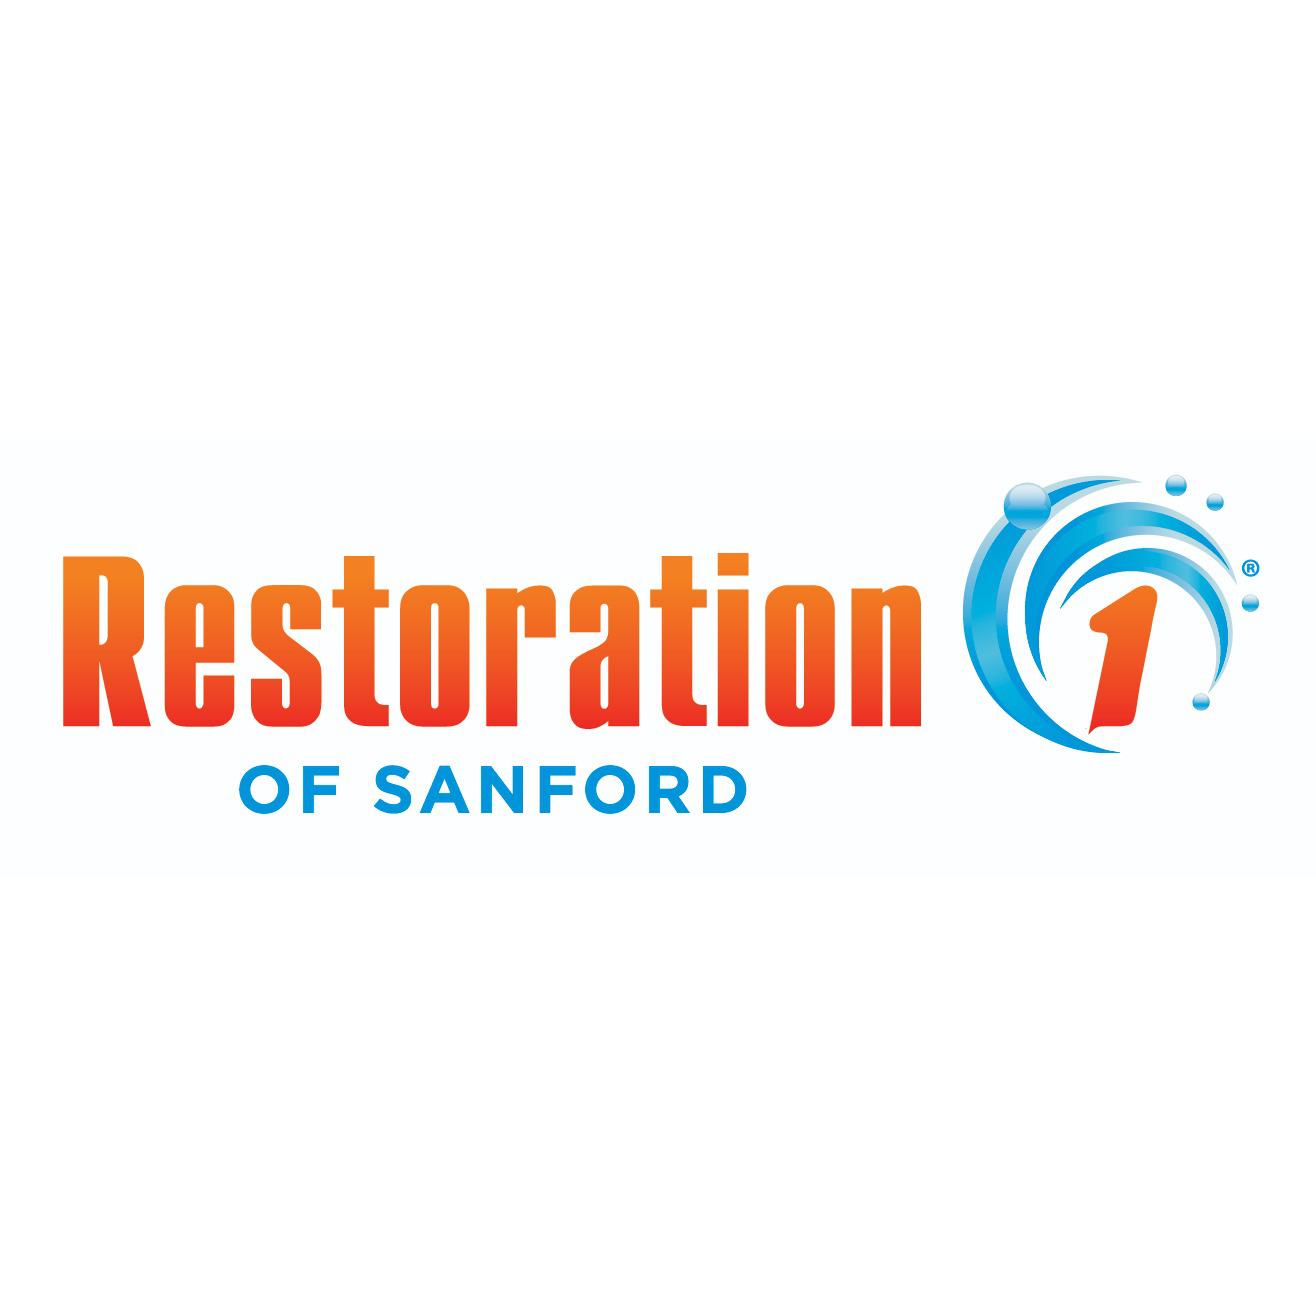 Restoration 1 of Sanford